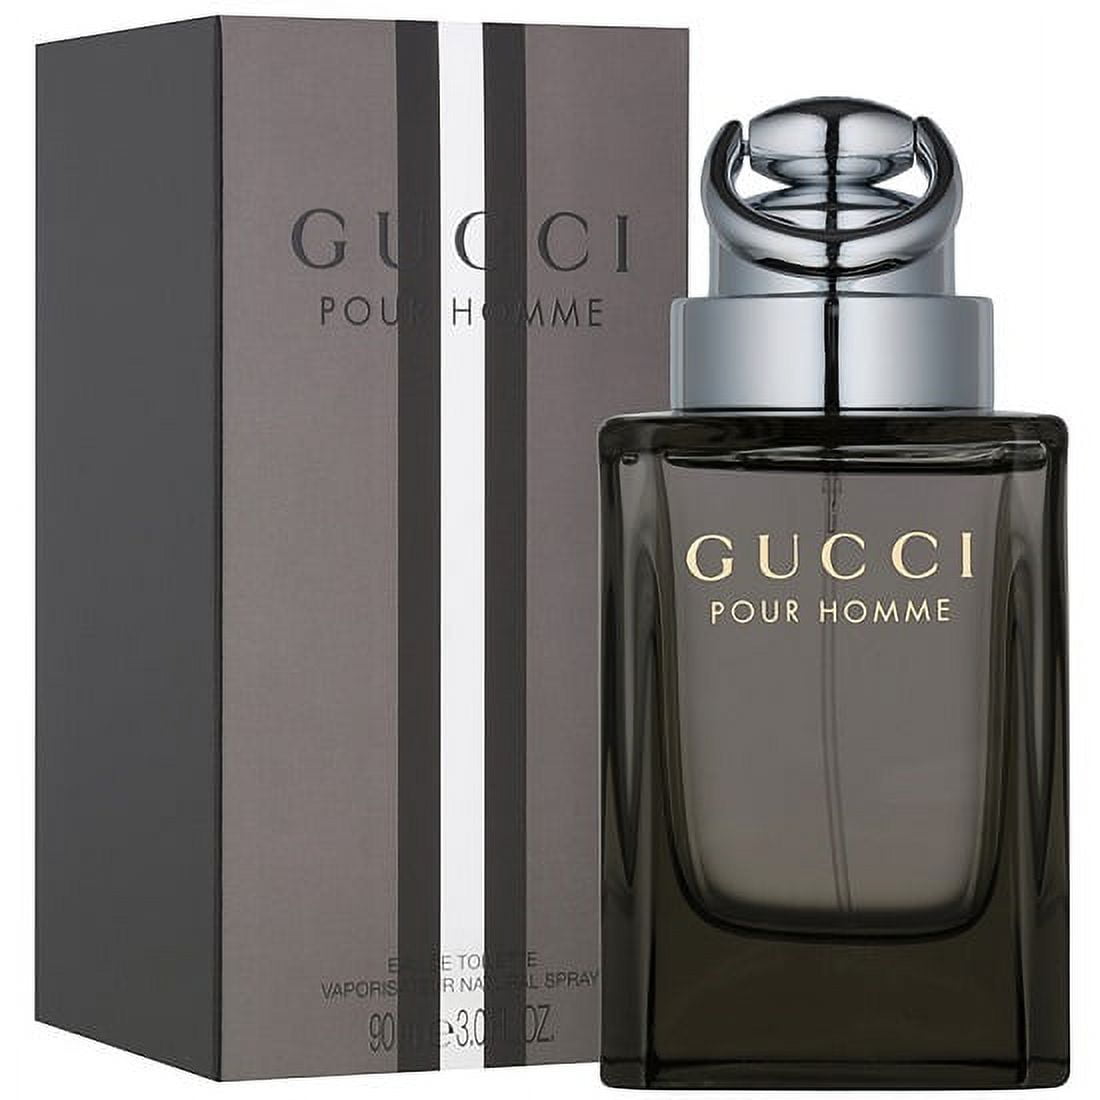 Gucci by Gucci Pour Homme EDT Cologne 3 OZ for Men 